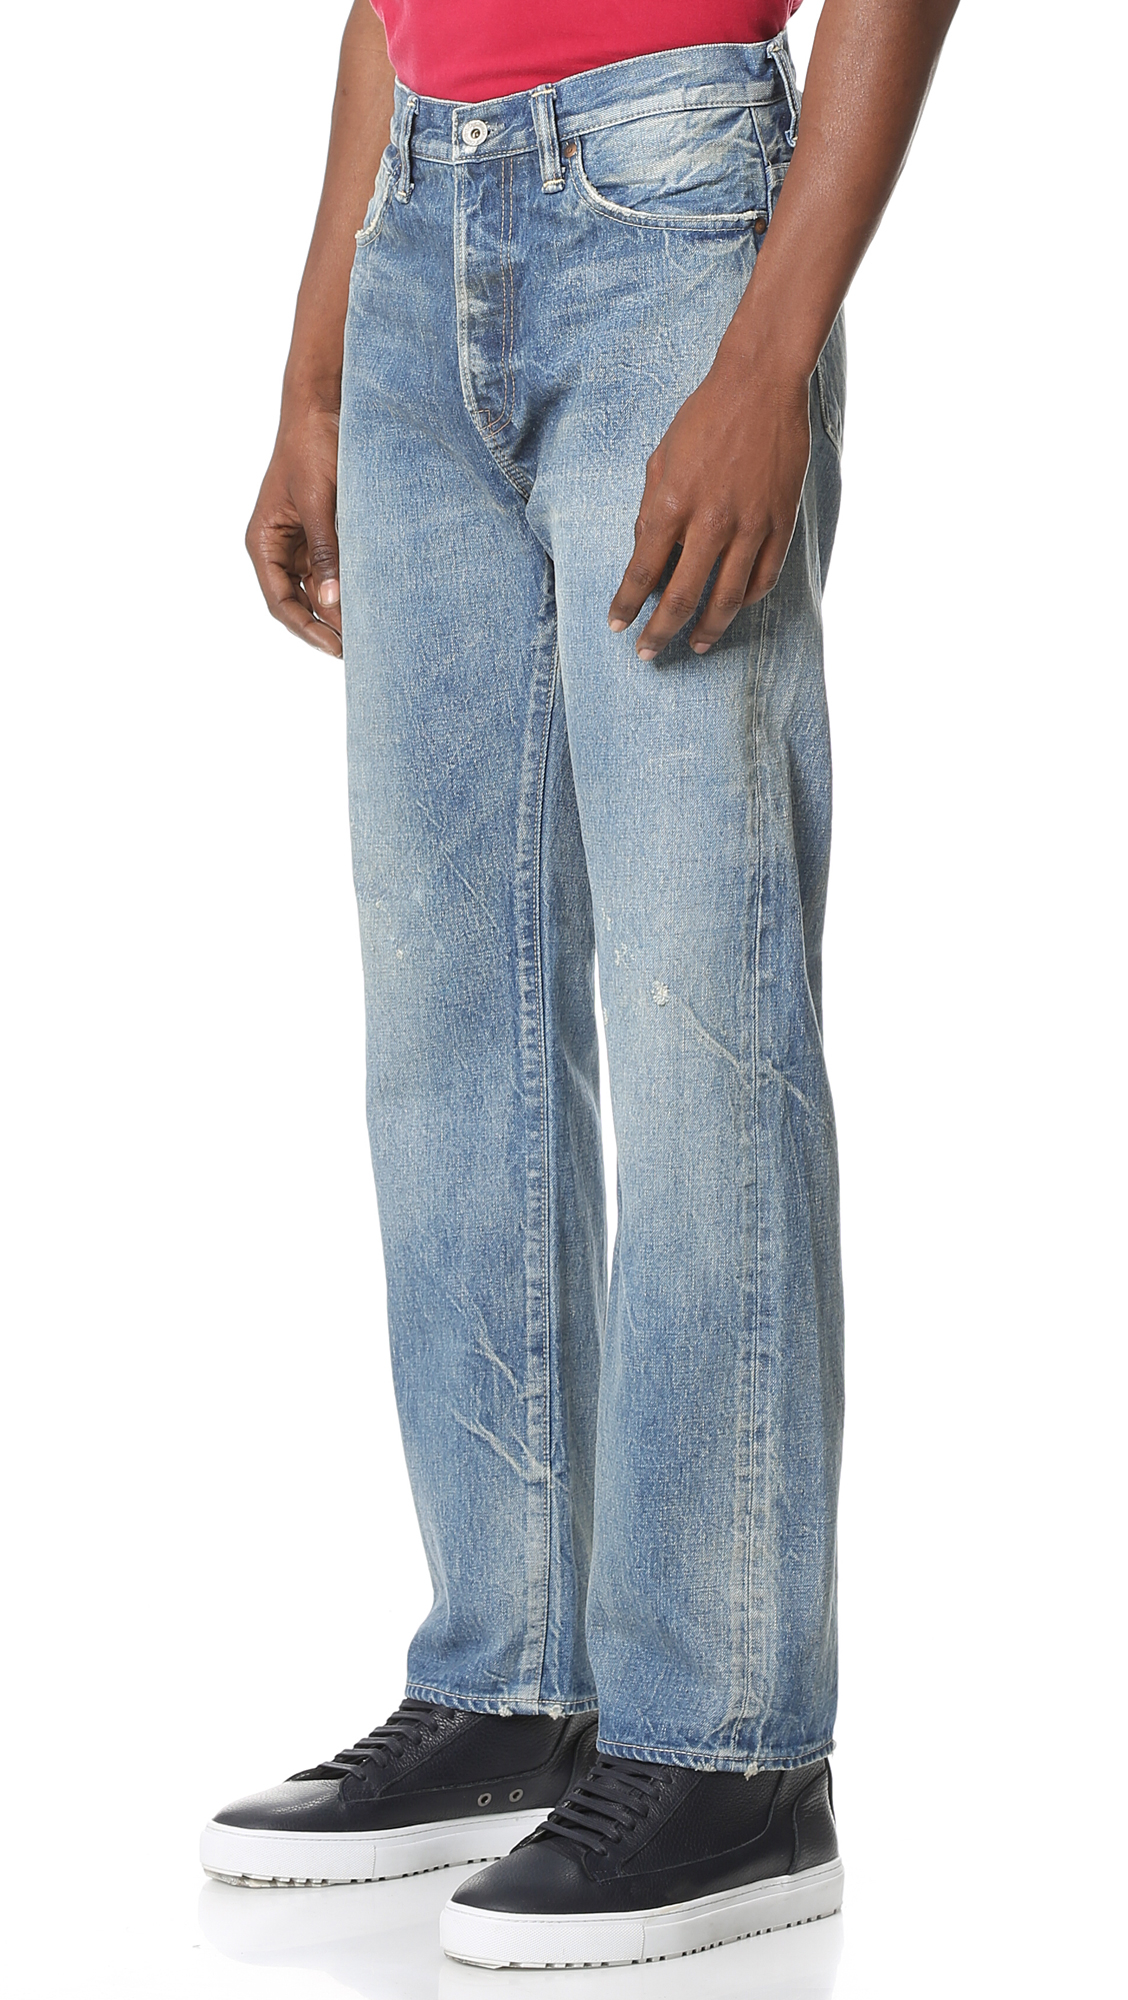 Chimala Selvedge Denim Baggy Straight Cut Jeans in Blue for Men - Lyst